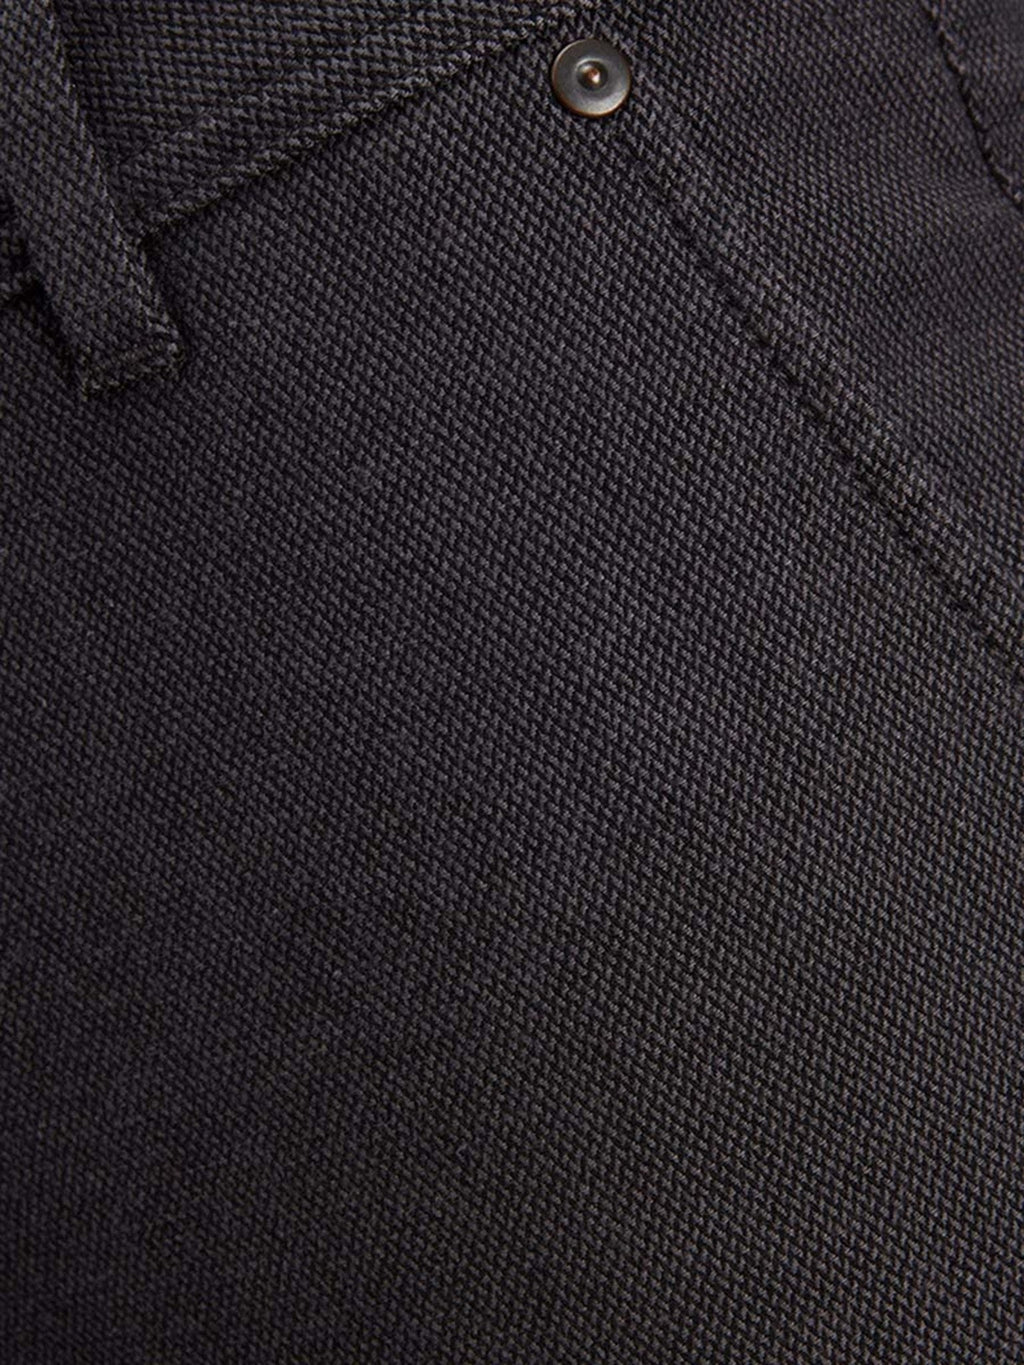 Originalne hlače strukture performansi (redovite) - tamno sive